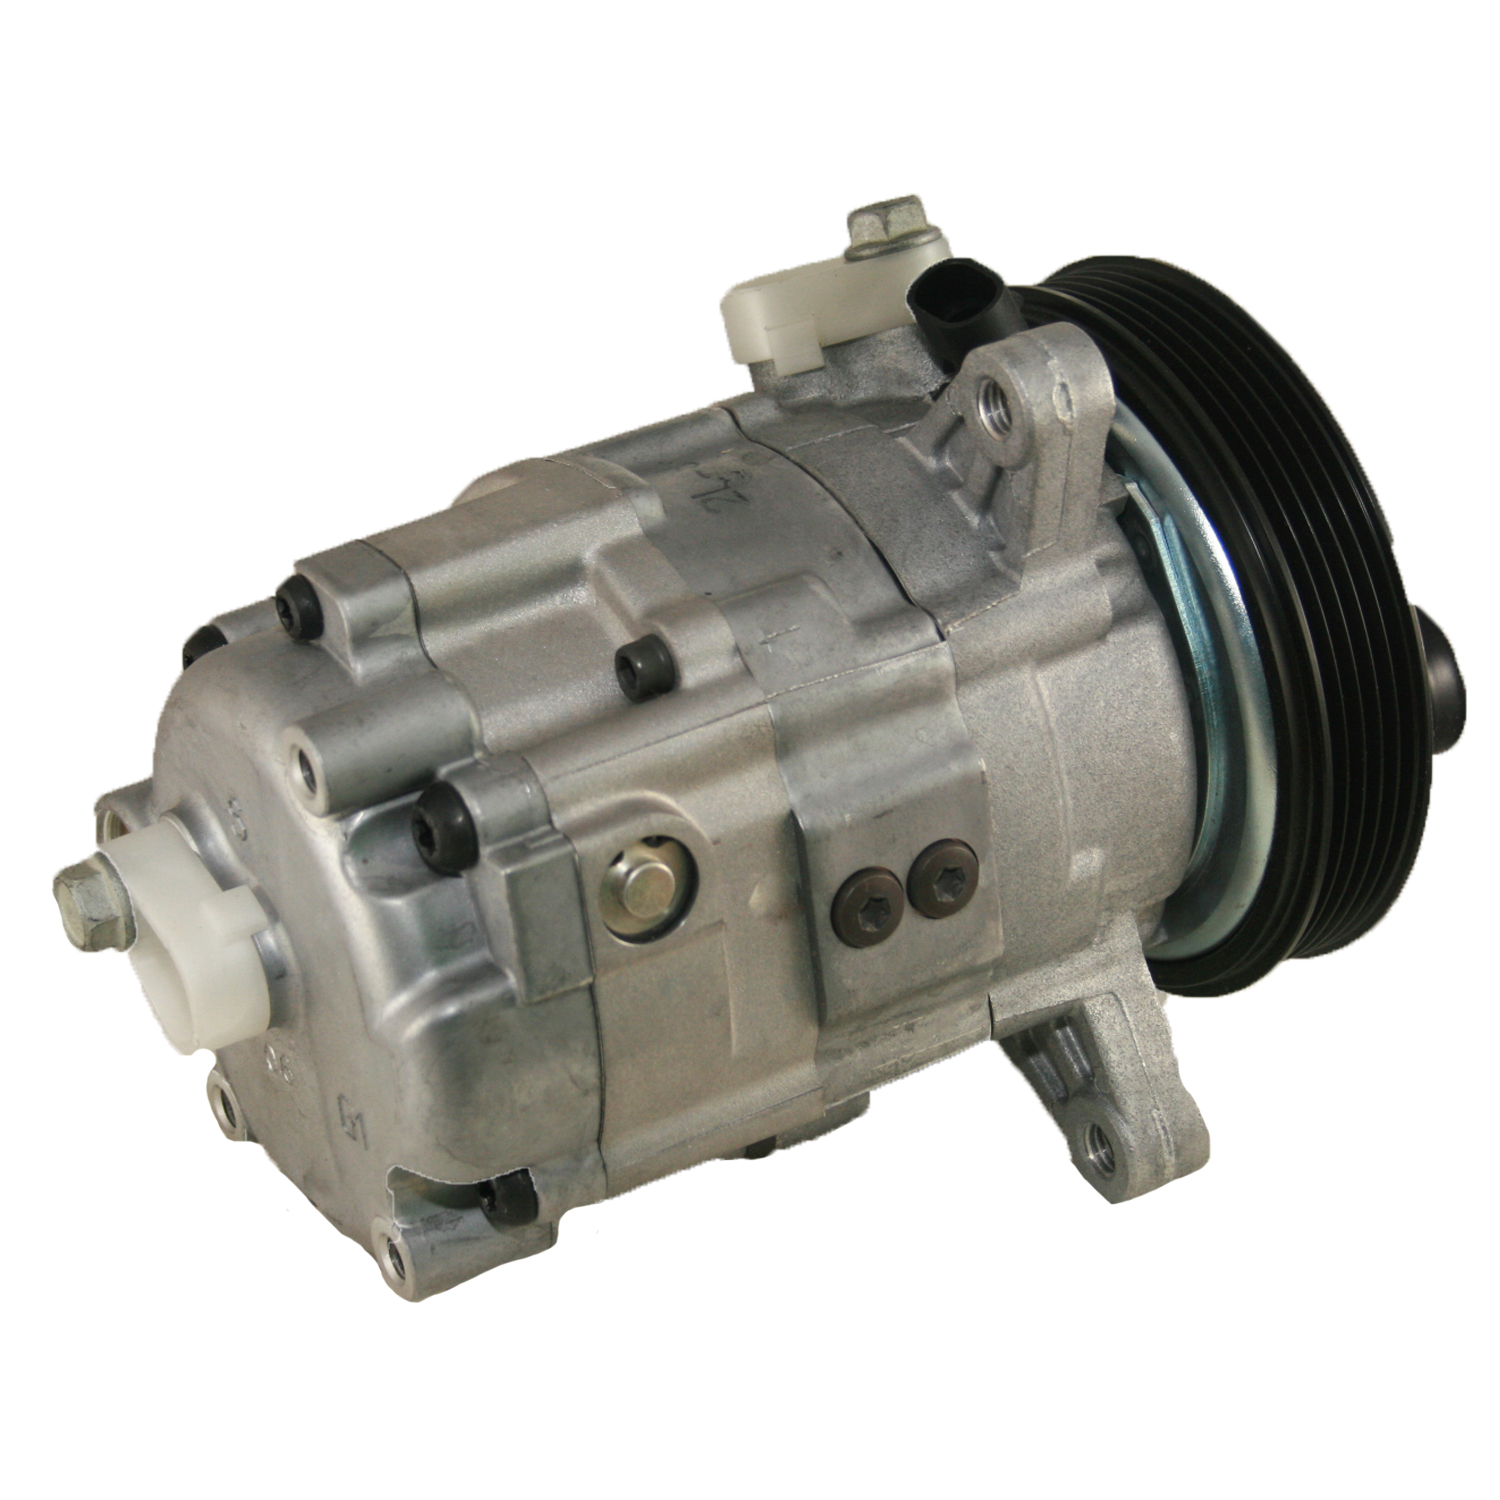 TCW Compressor 12600.501NEW New Product Image field_60b6a13a6e67c